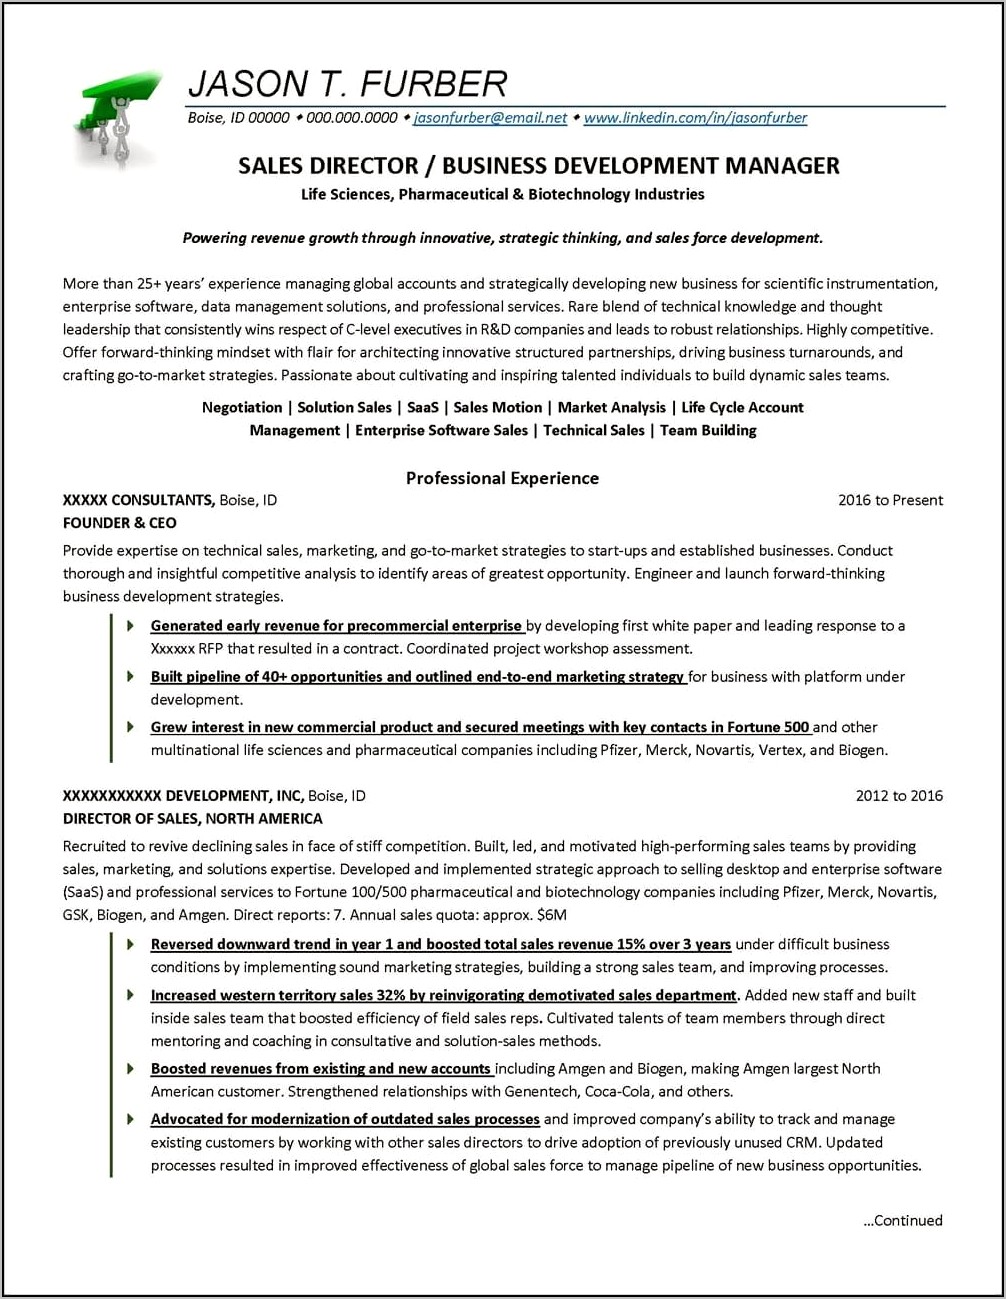 Business Development Manager Brief Resumen Description